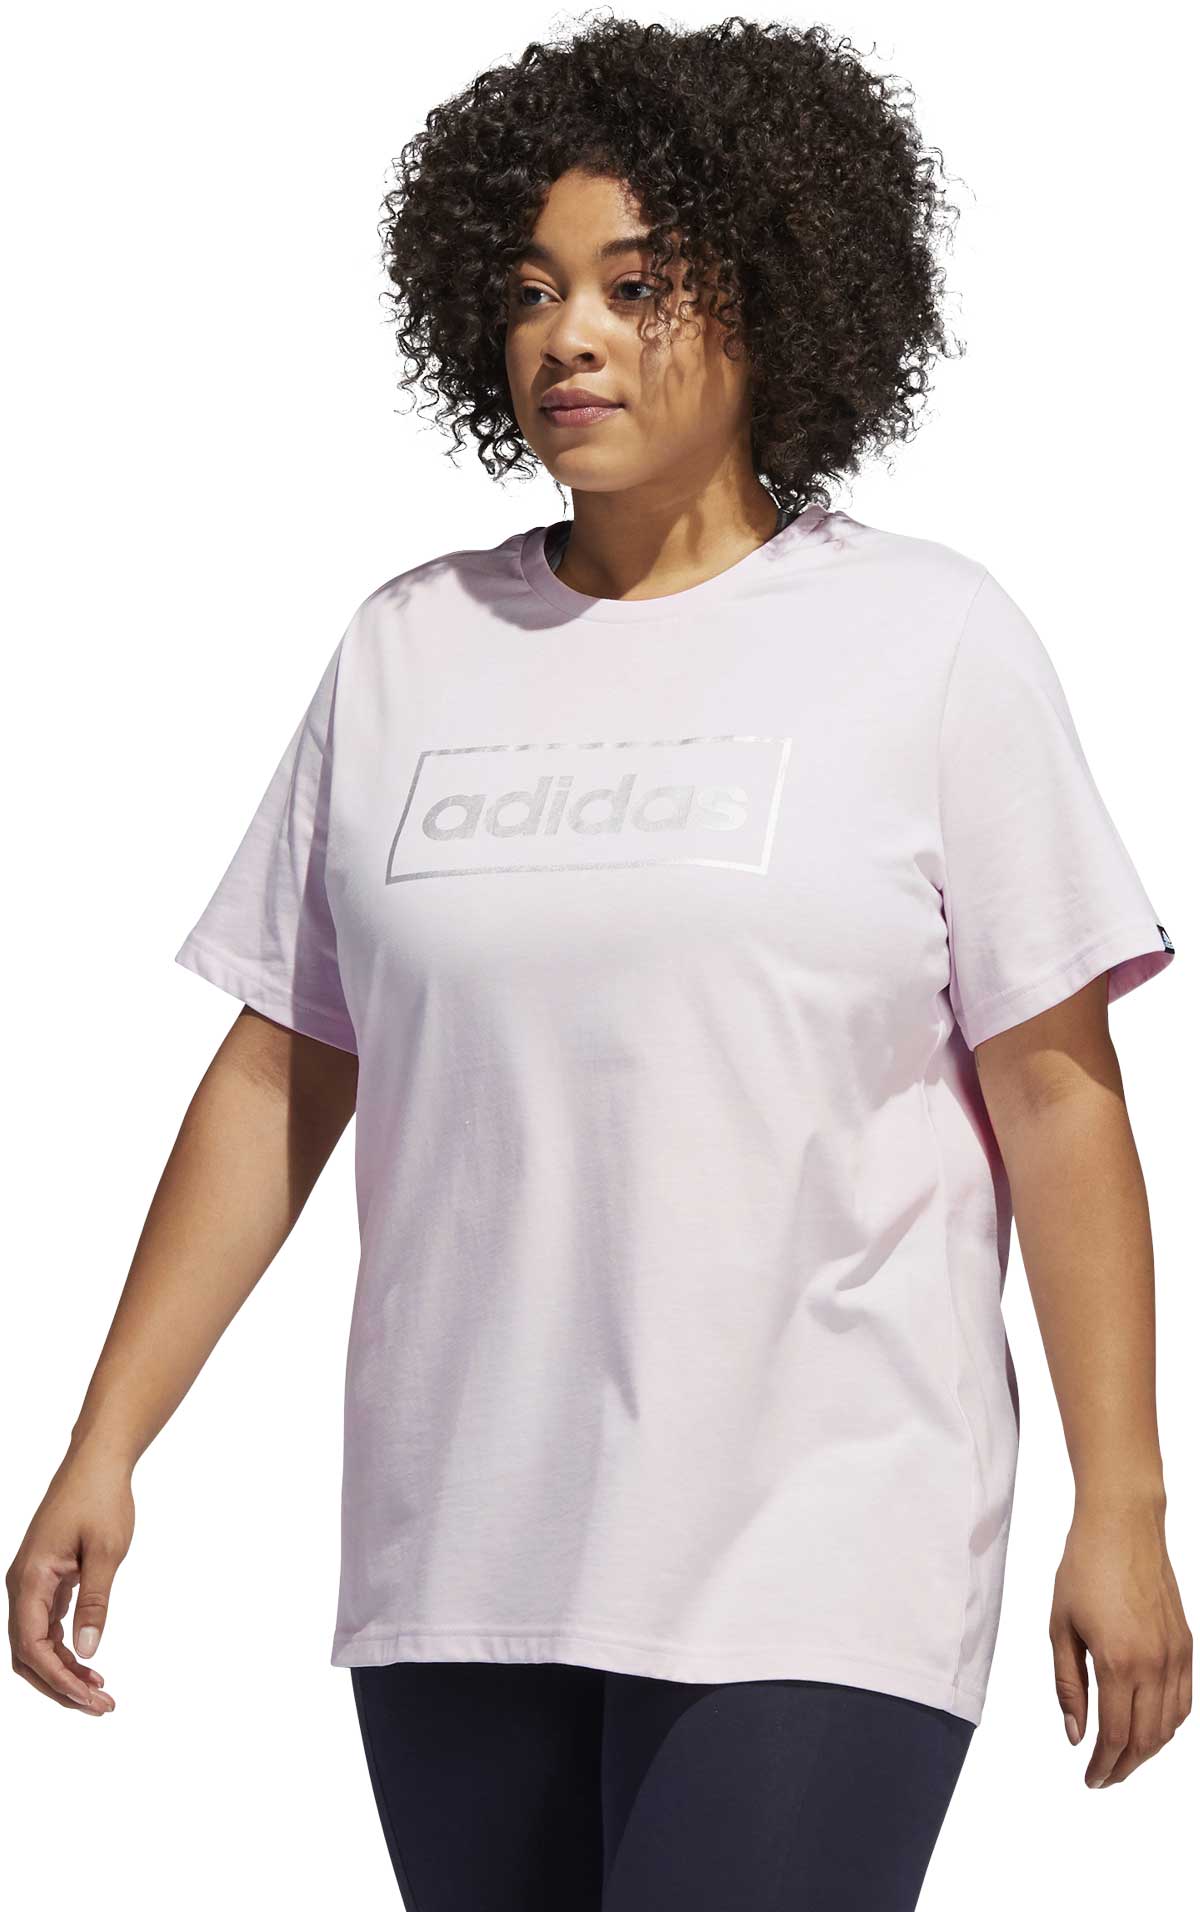 Women’s plus size sports T-shirt